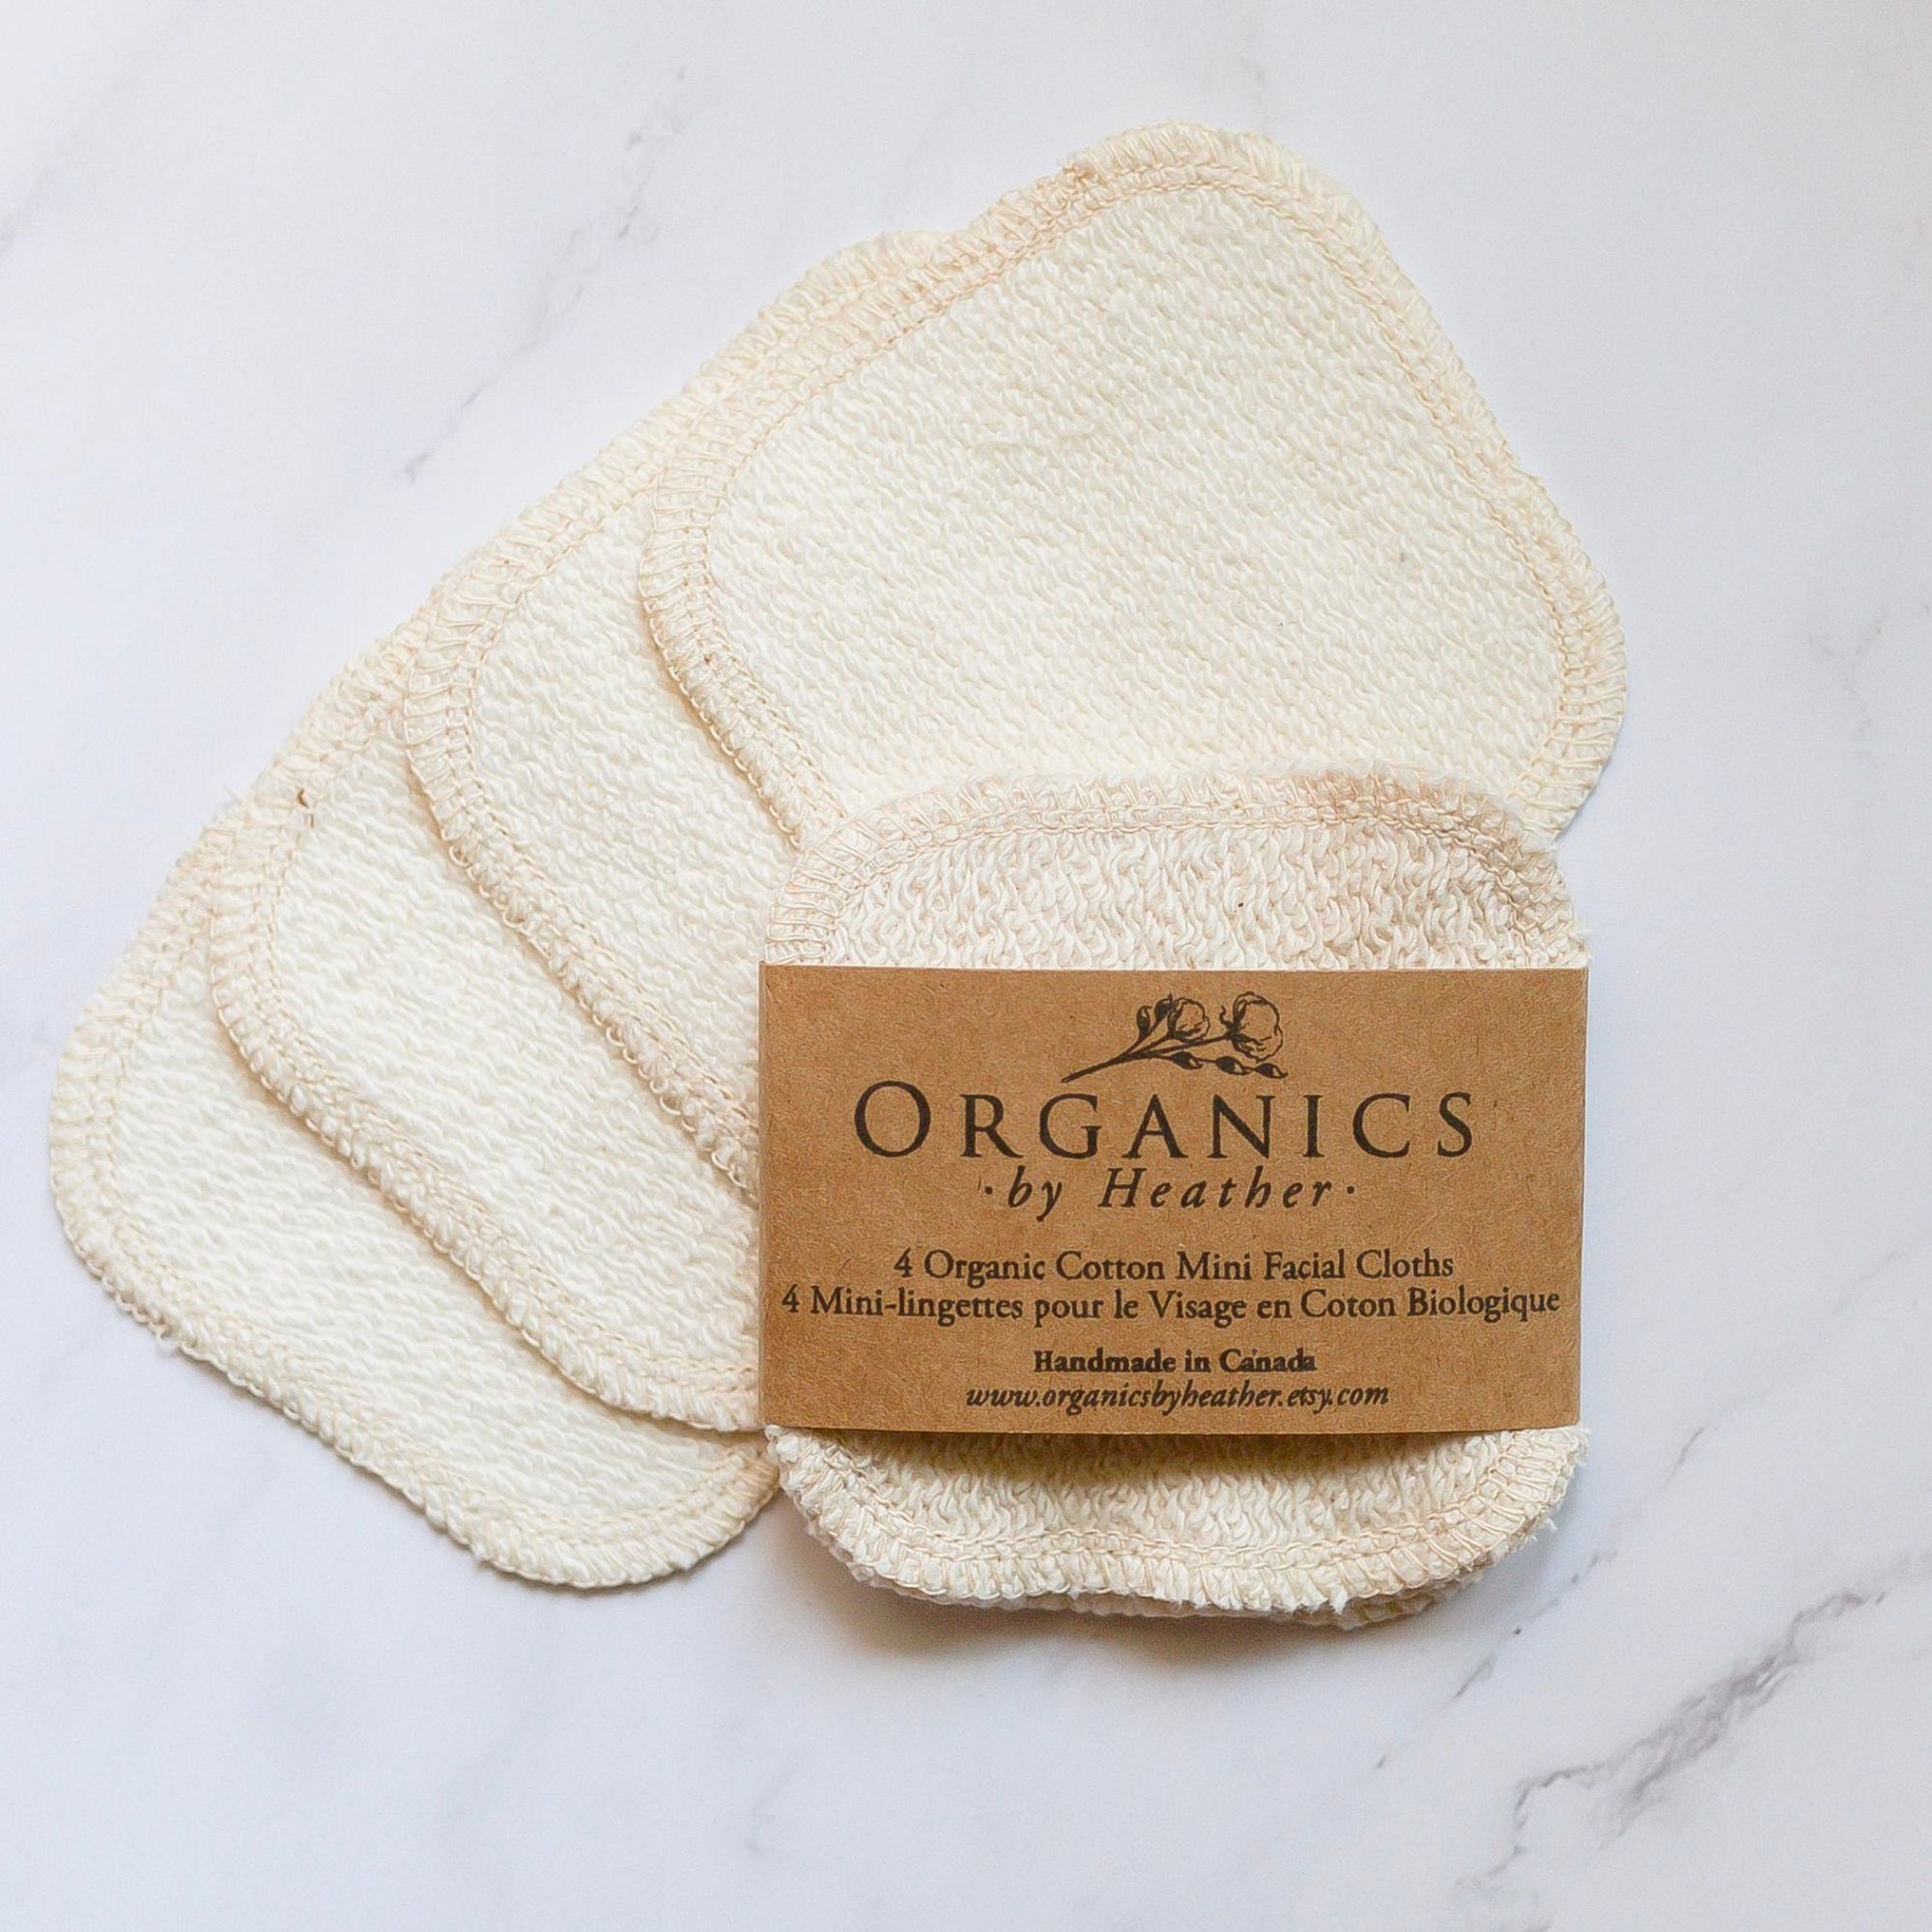 Organics by Heather - Mini Organic Cotton Face Cloth - ORESTA clean beauty simplified